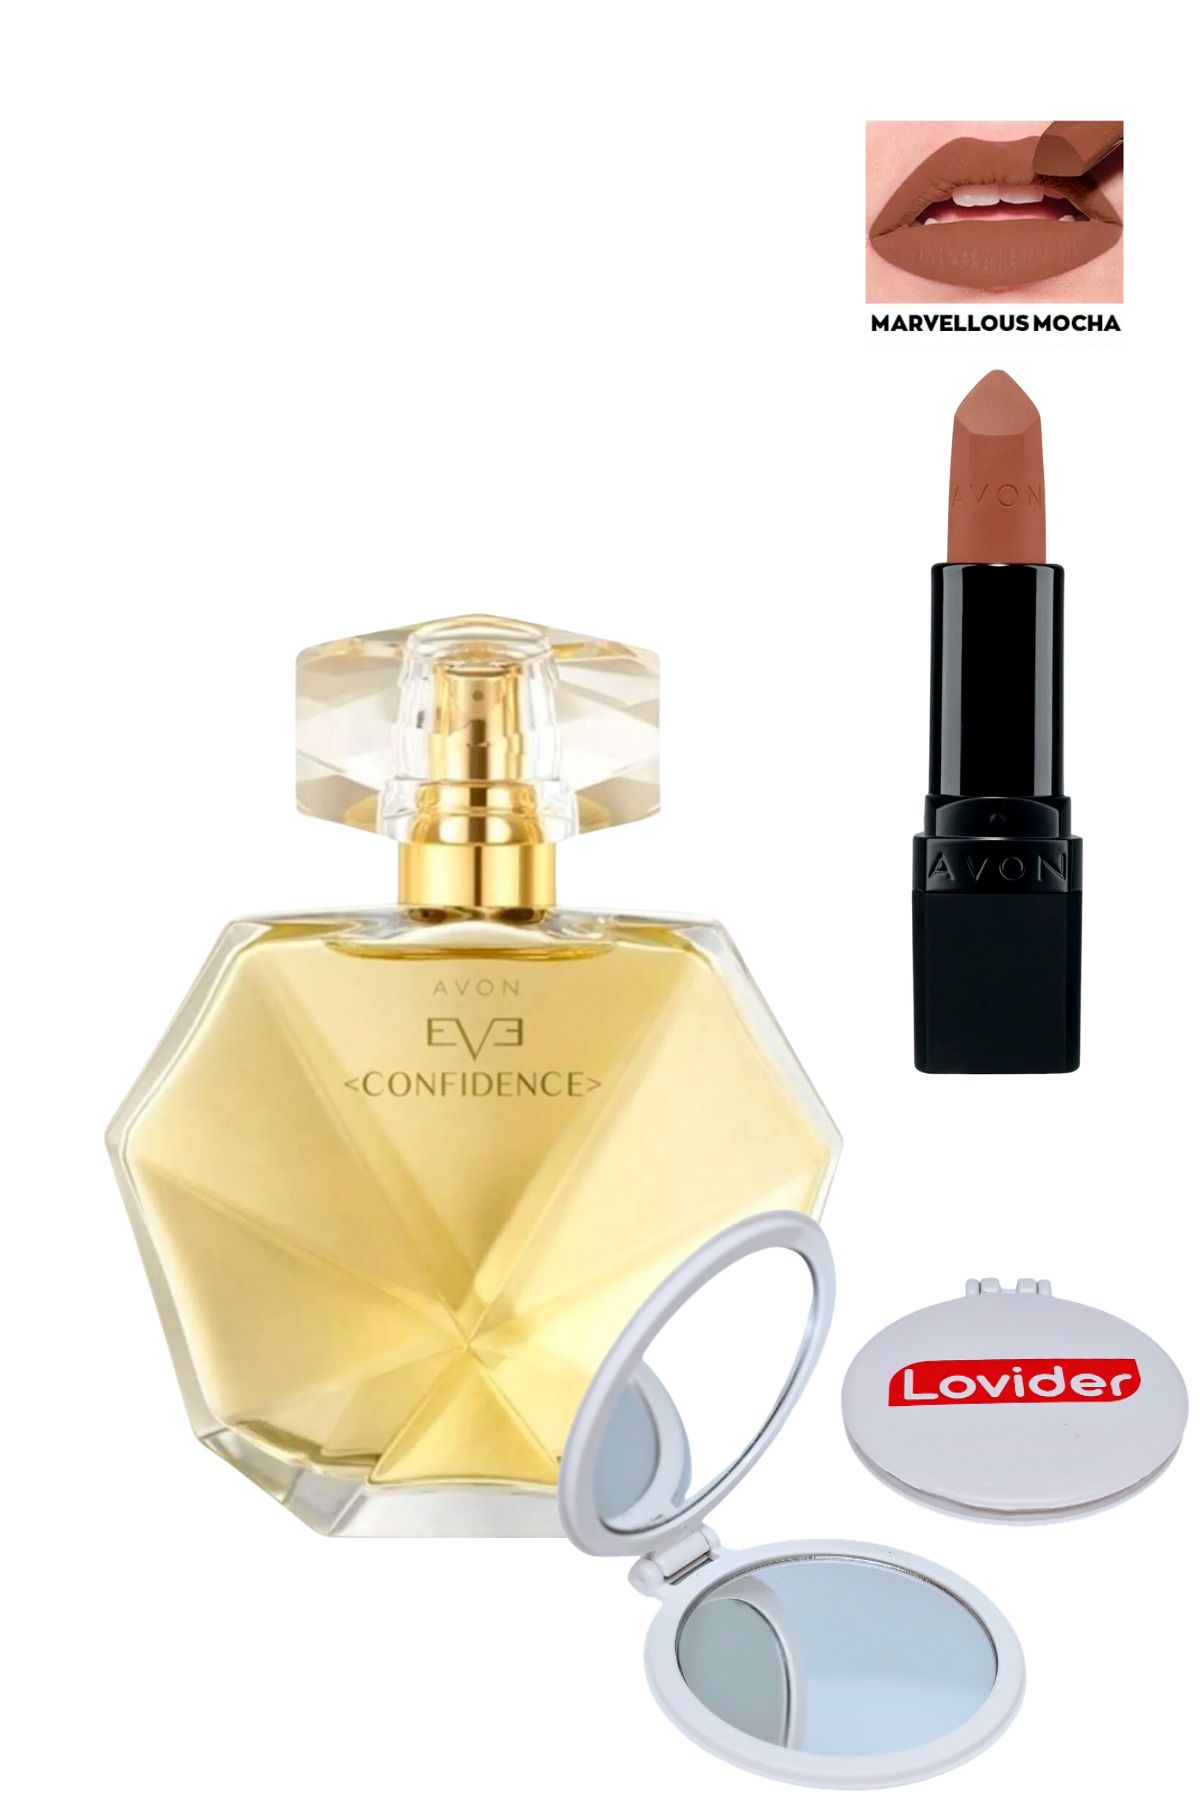 Avon Eve Confidence Kadın Parfüm EDP 50ml + Marvellous Mocha Mat Ruj + Lovider Cep Aynası